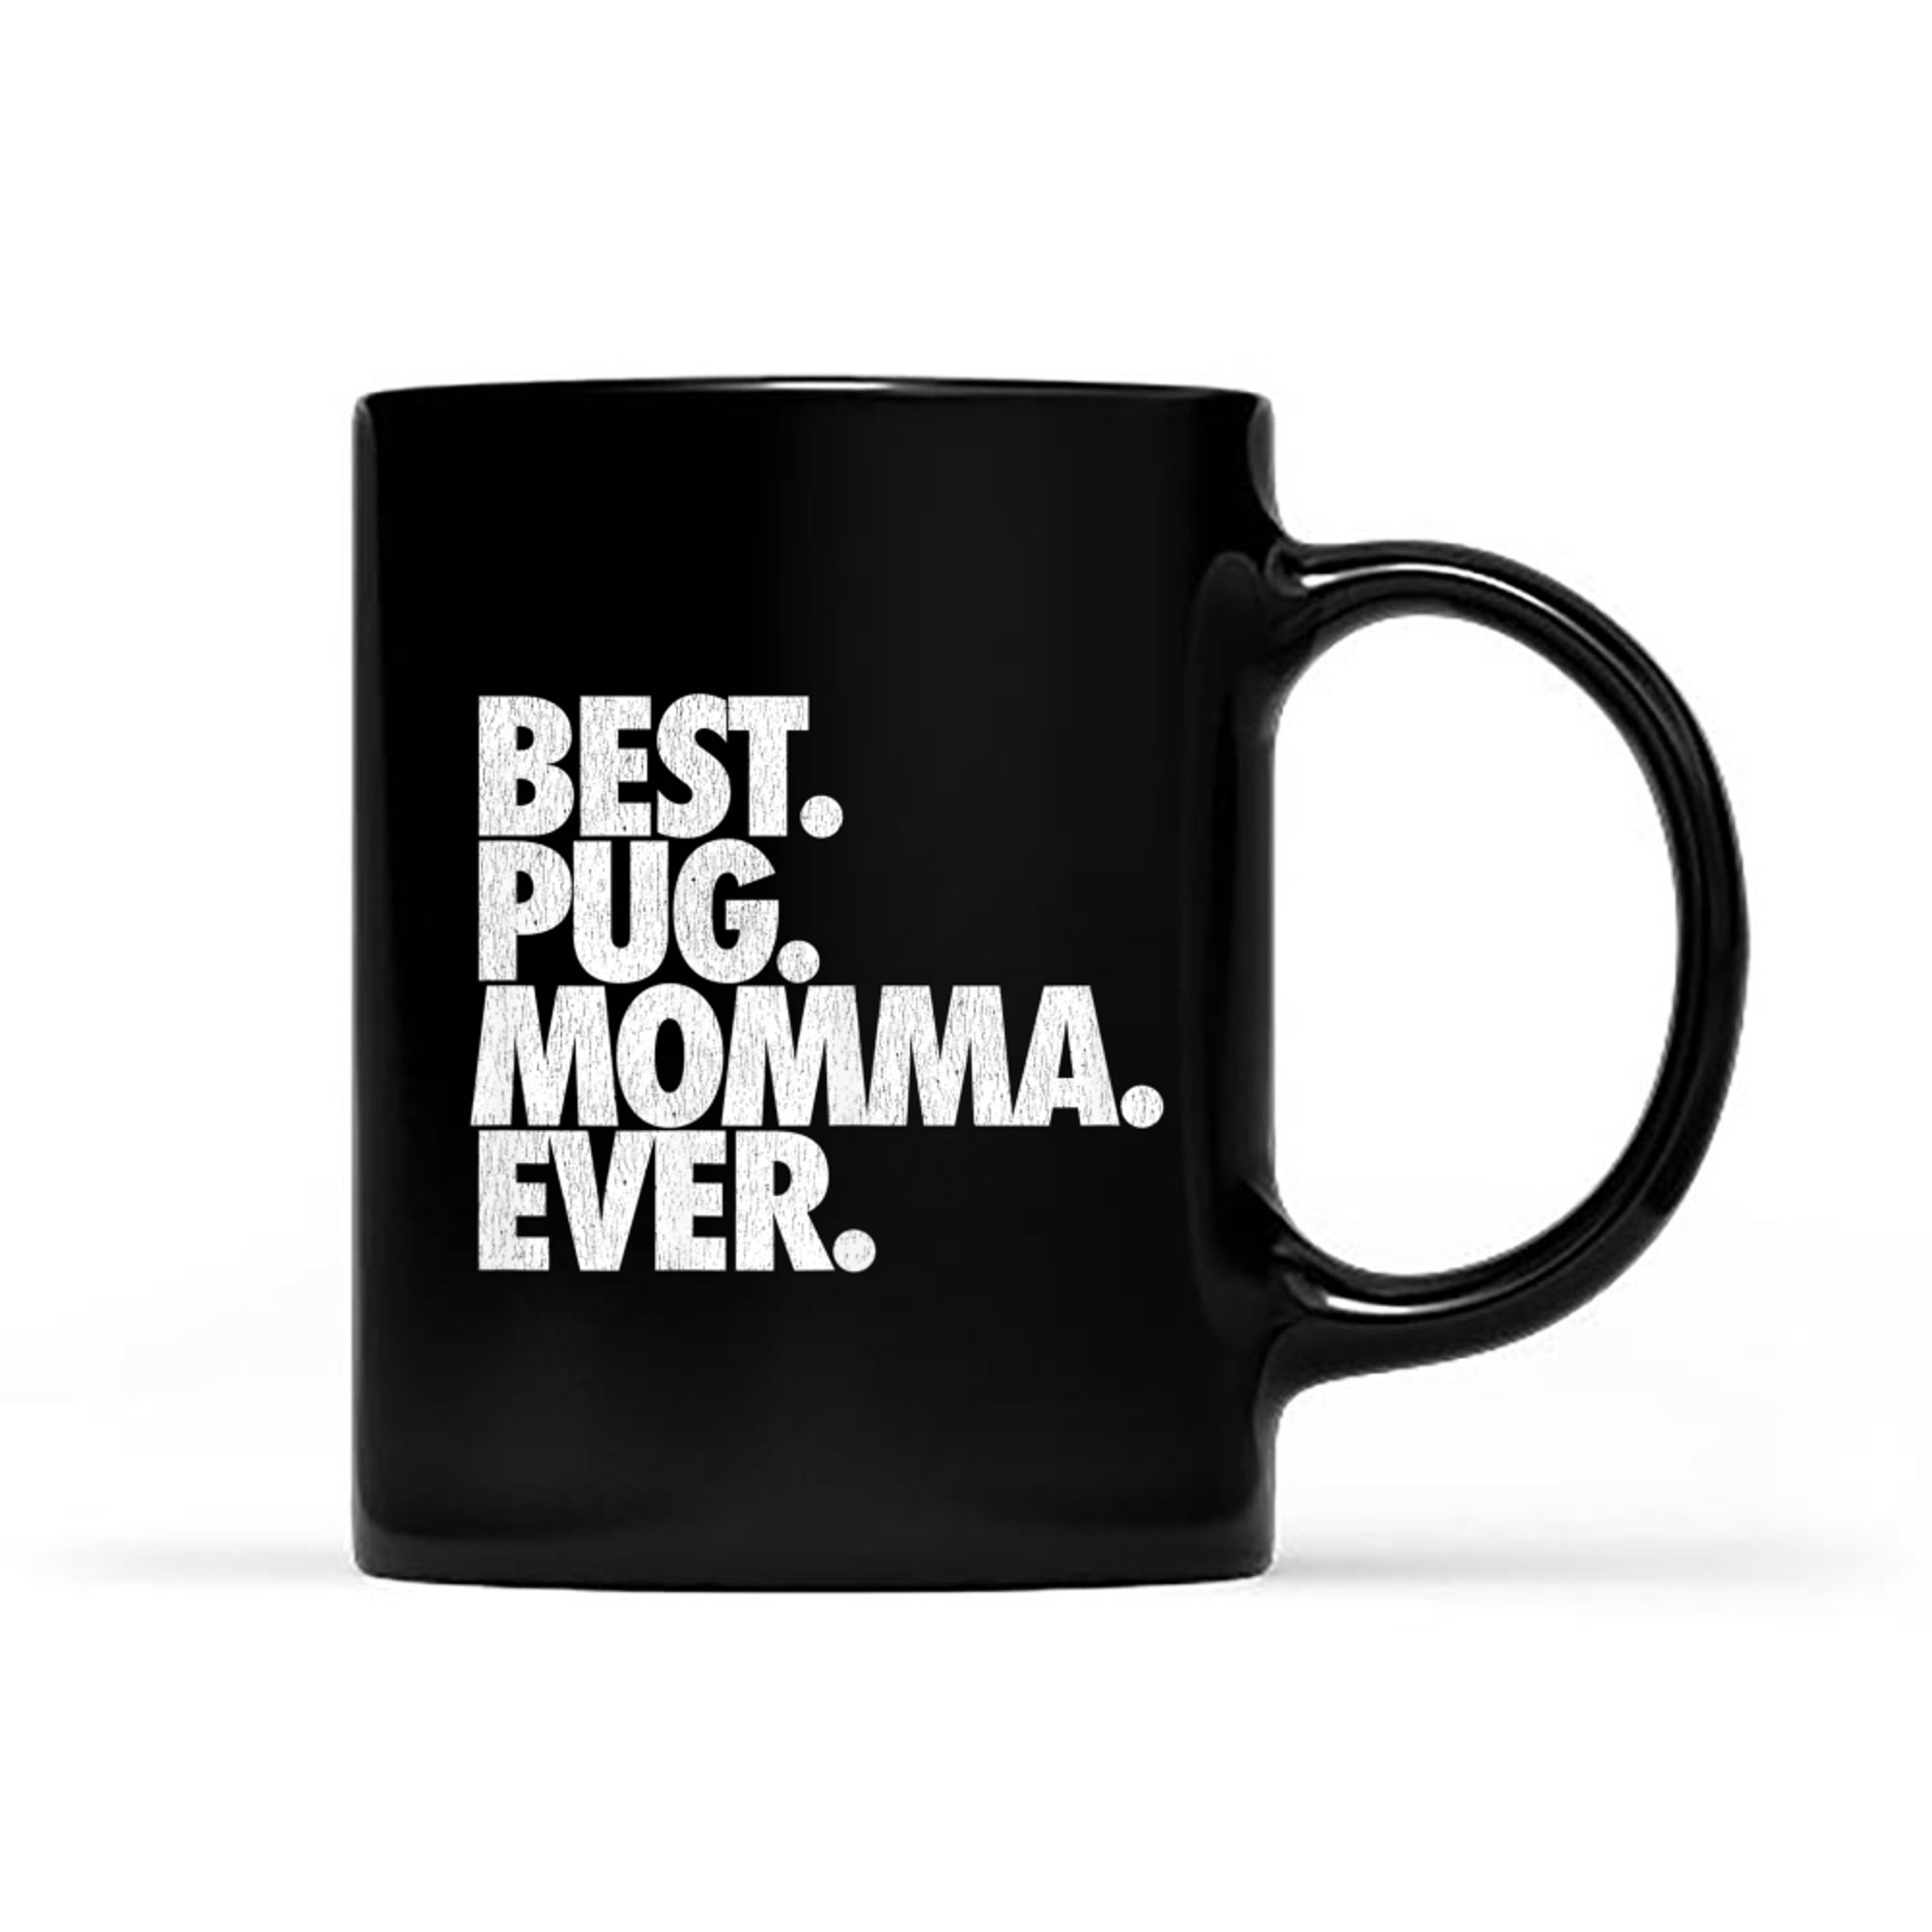 Best Pug Momma Ever - Cute Pug Mom Dog Gift mug black